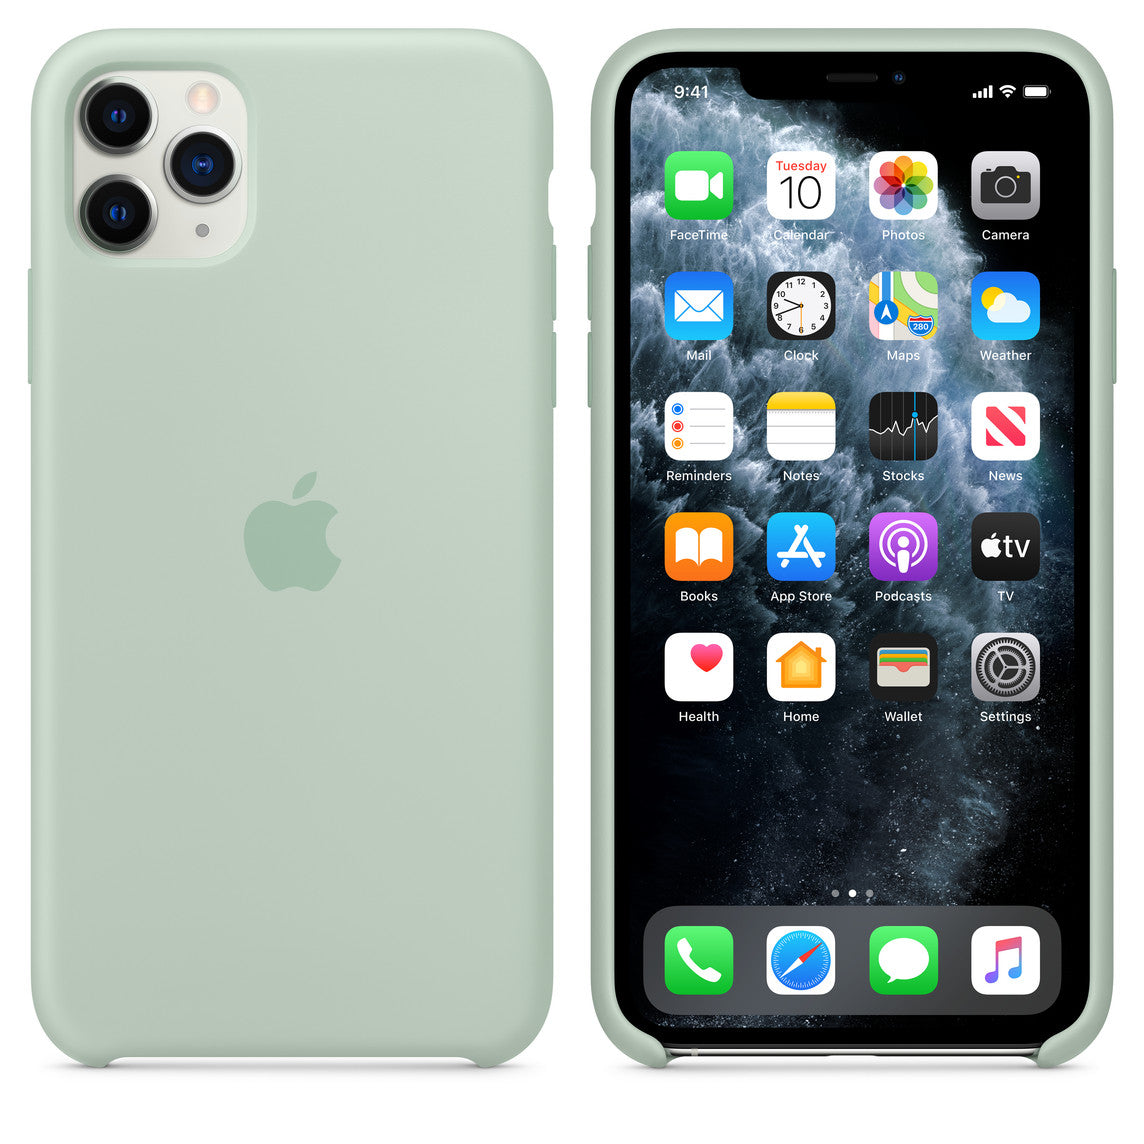 Apple iPhone 11 Pro Max Silicone Case - Beryl